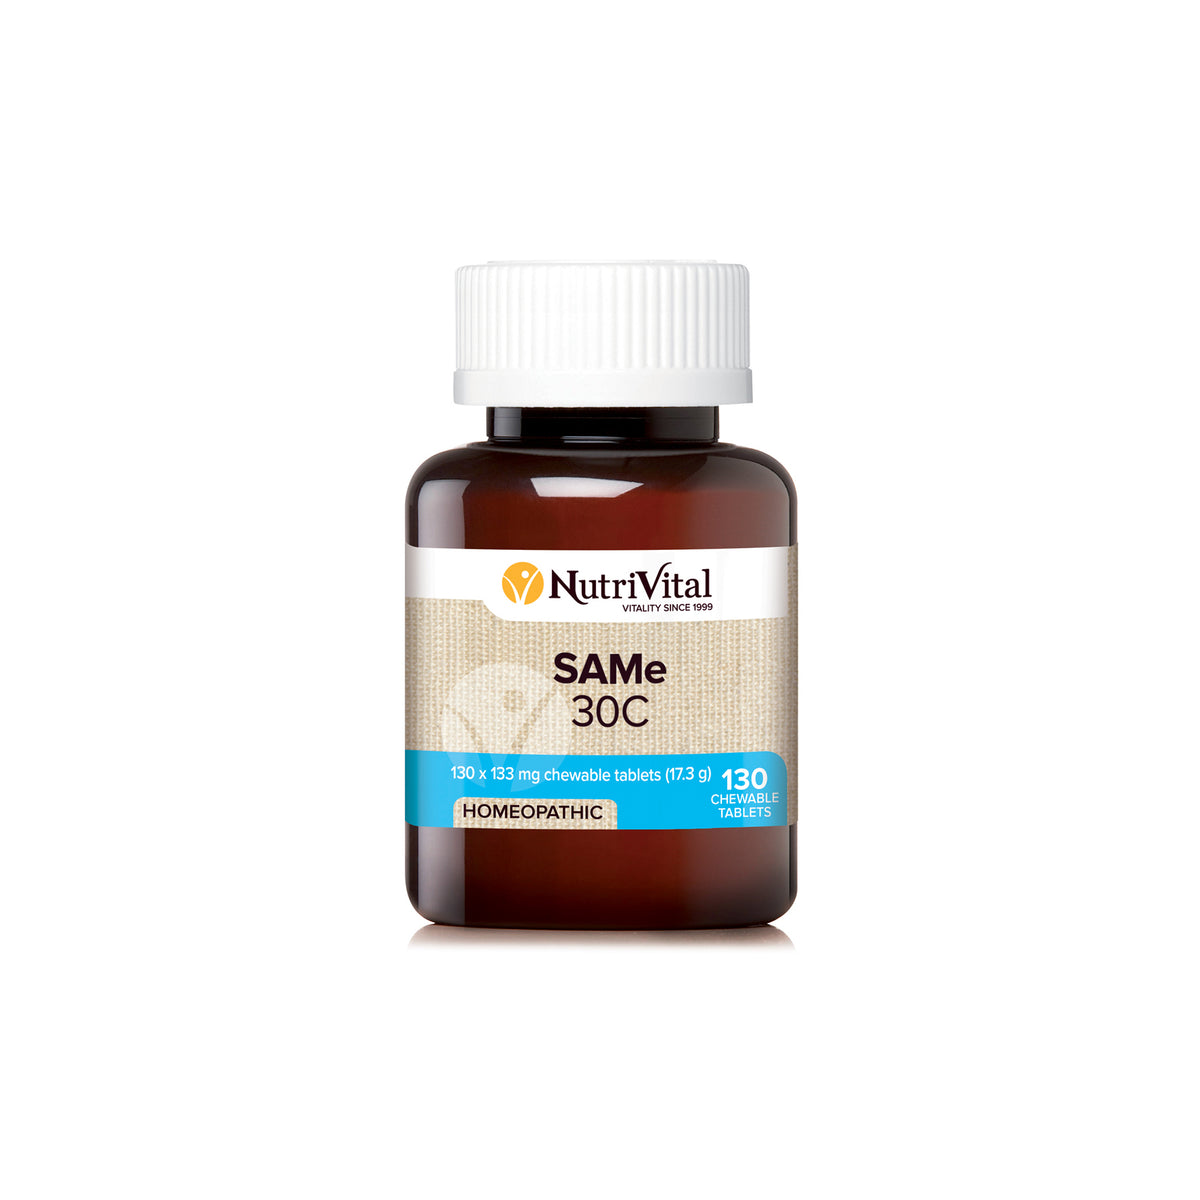 NutriVital Homeopathic SAMe 30C